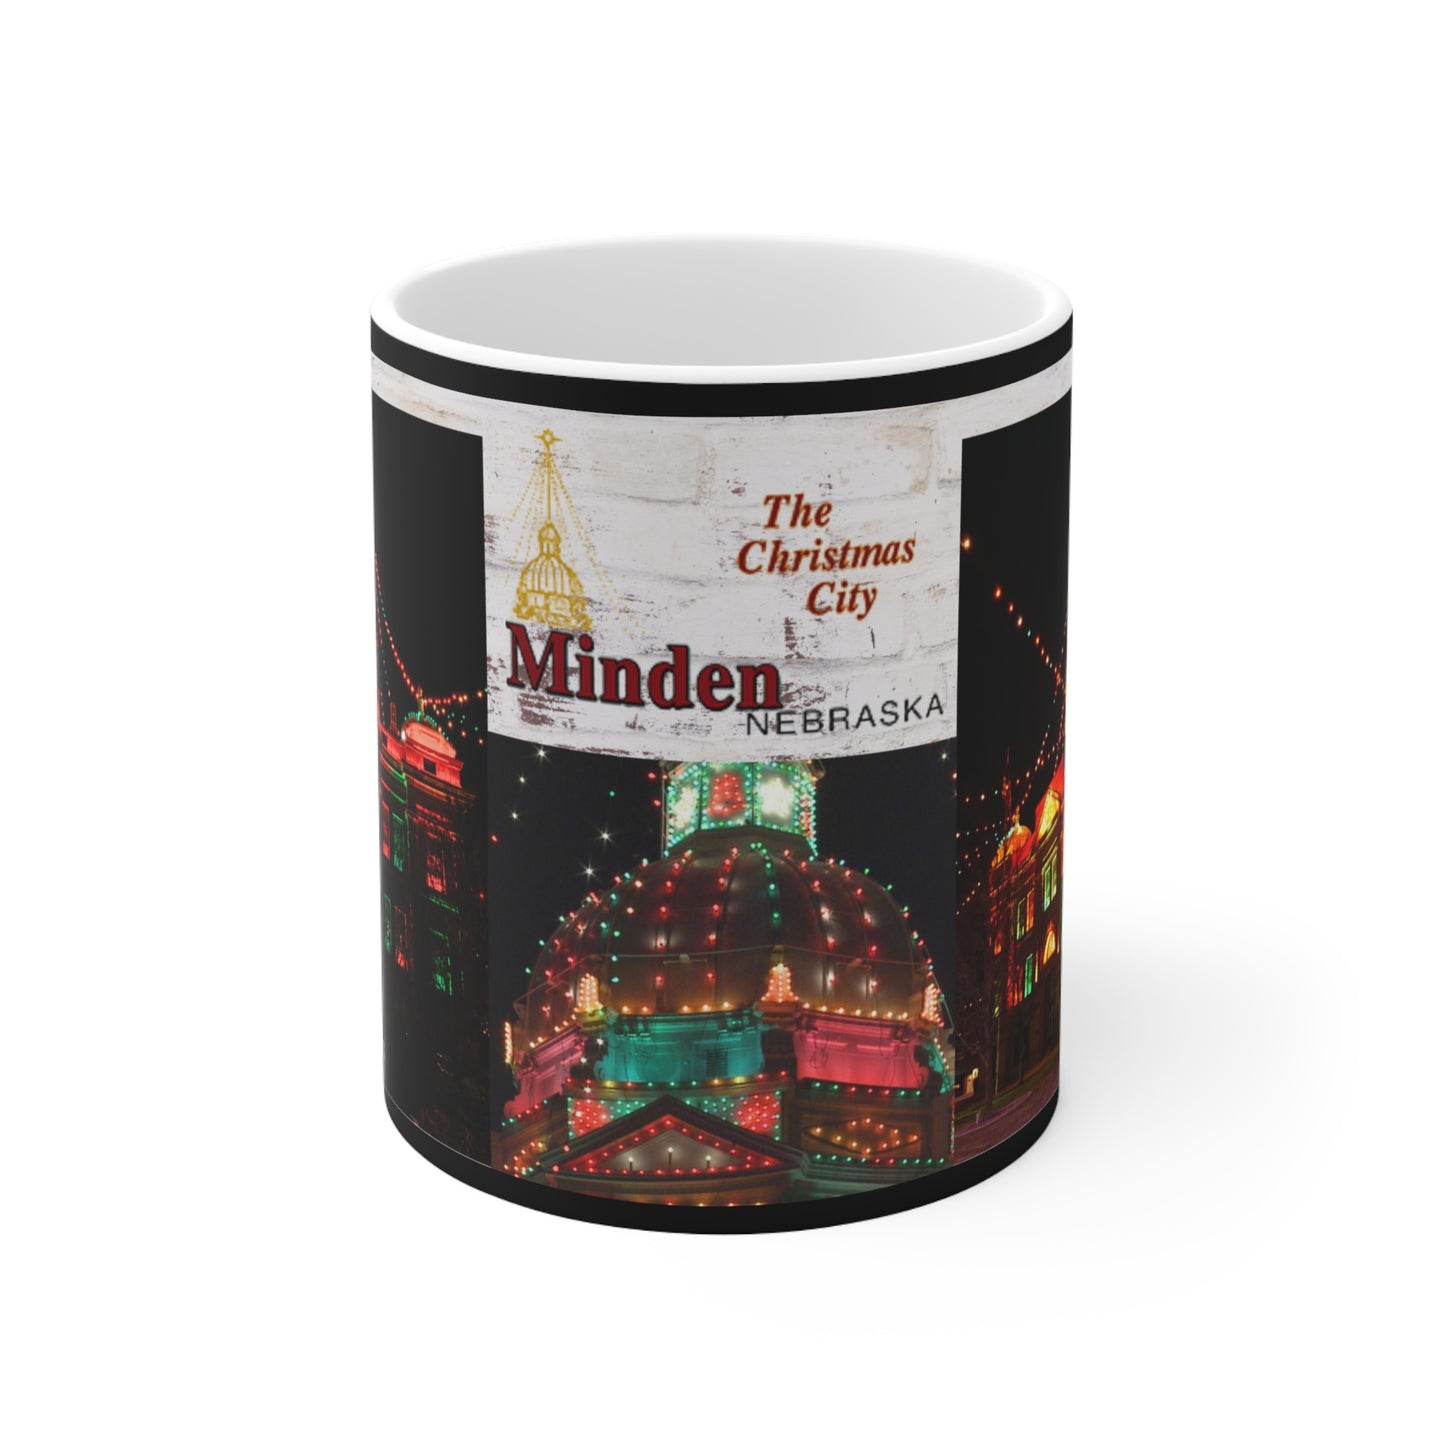 Minden, Nebraska Christmas City Ceramic Mug 11oz